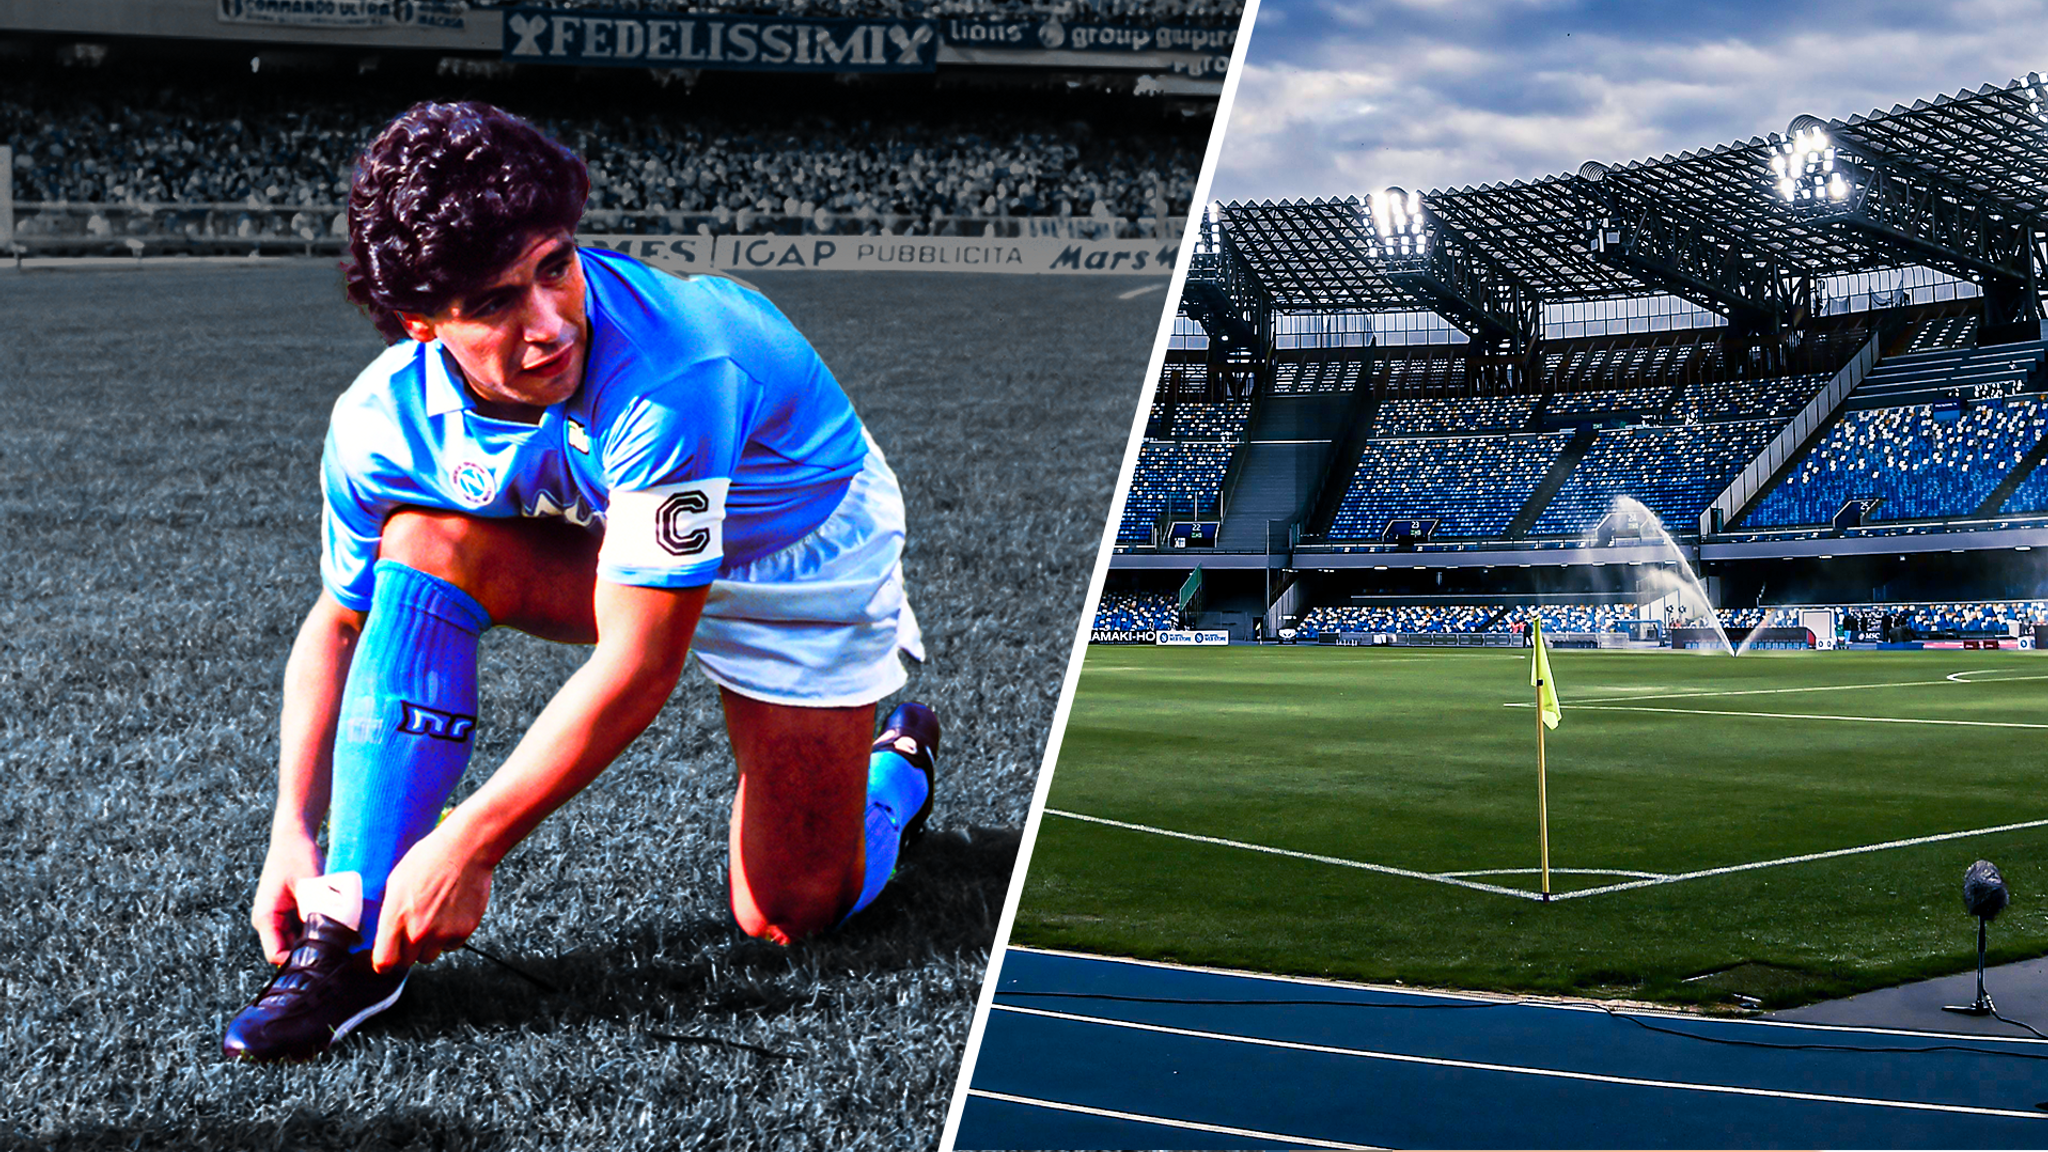 Diego Maradona: Napoli Consider Renaming Stadium San Paolo Diego Armando Maradona